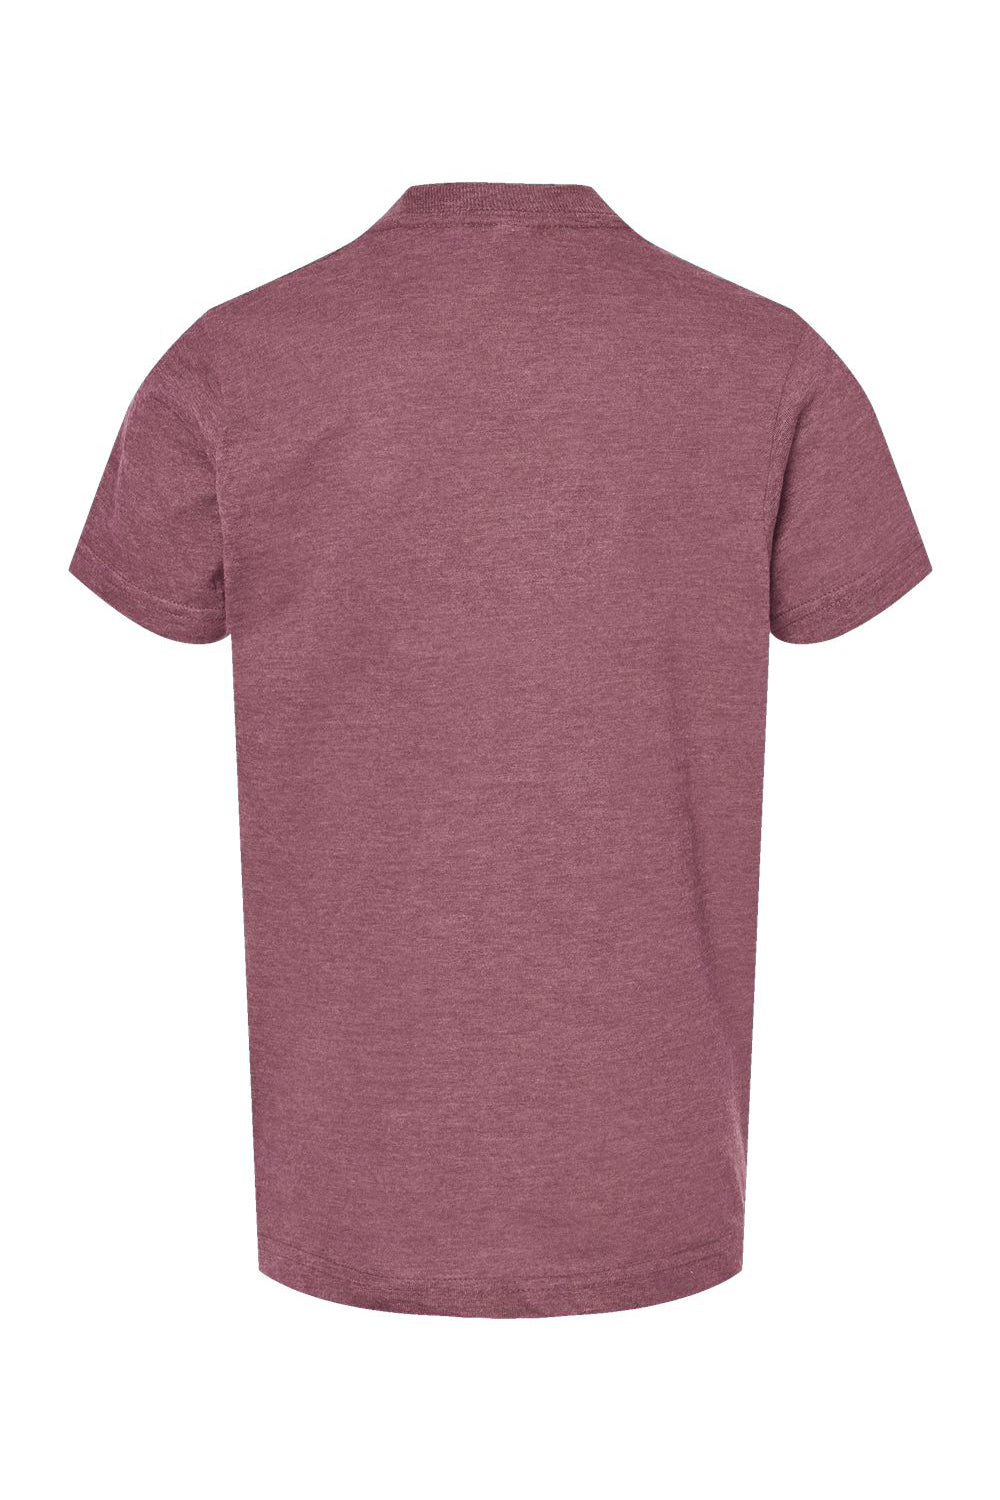 Tultex 235 Youth Fine Jersey Short Sleeve Crewneck T-Shirt Heather Cassis Pink Flat Back